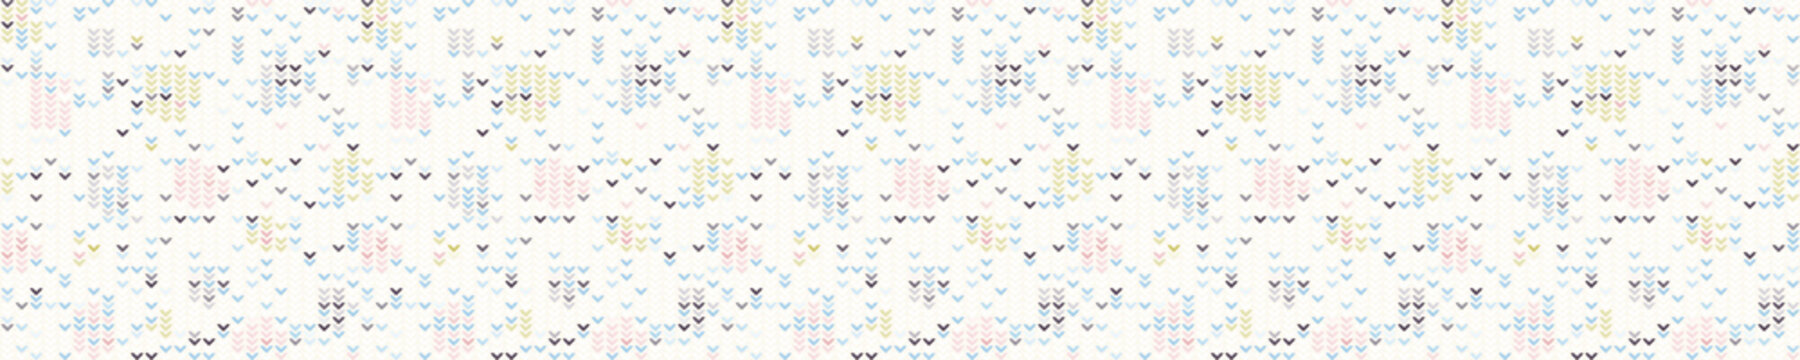 Baby Blanket Knit Stitch Seamless Border Pattern. Homespun Pastel Color Handicraft Background. For Woolen  Cute Gender Neutral Textile Banner. Variegated Yarn Melange Scandi Ribbon Trim Vector Eps 10